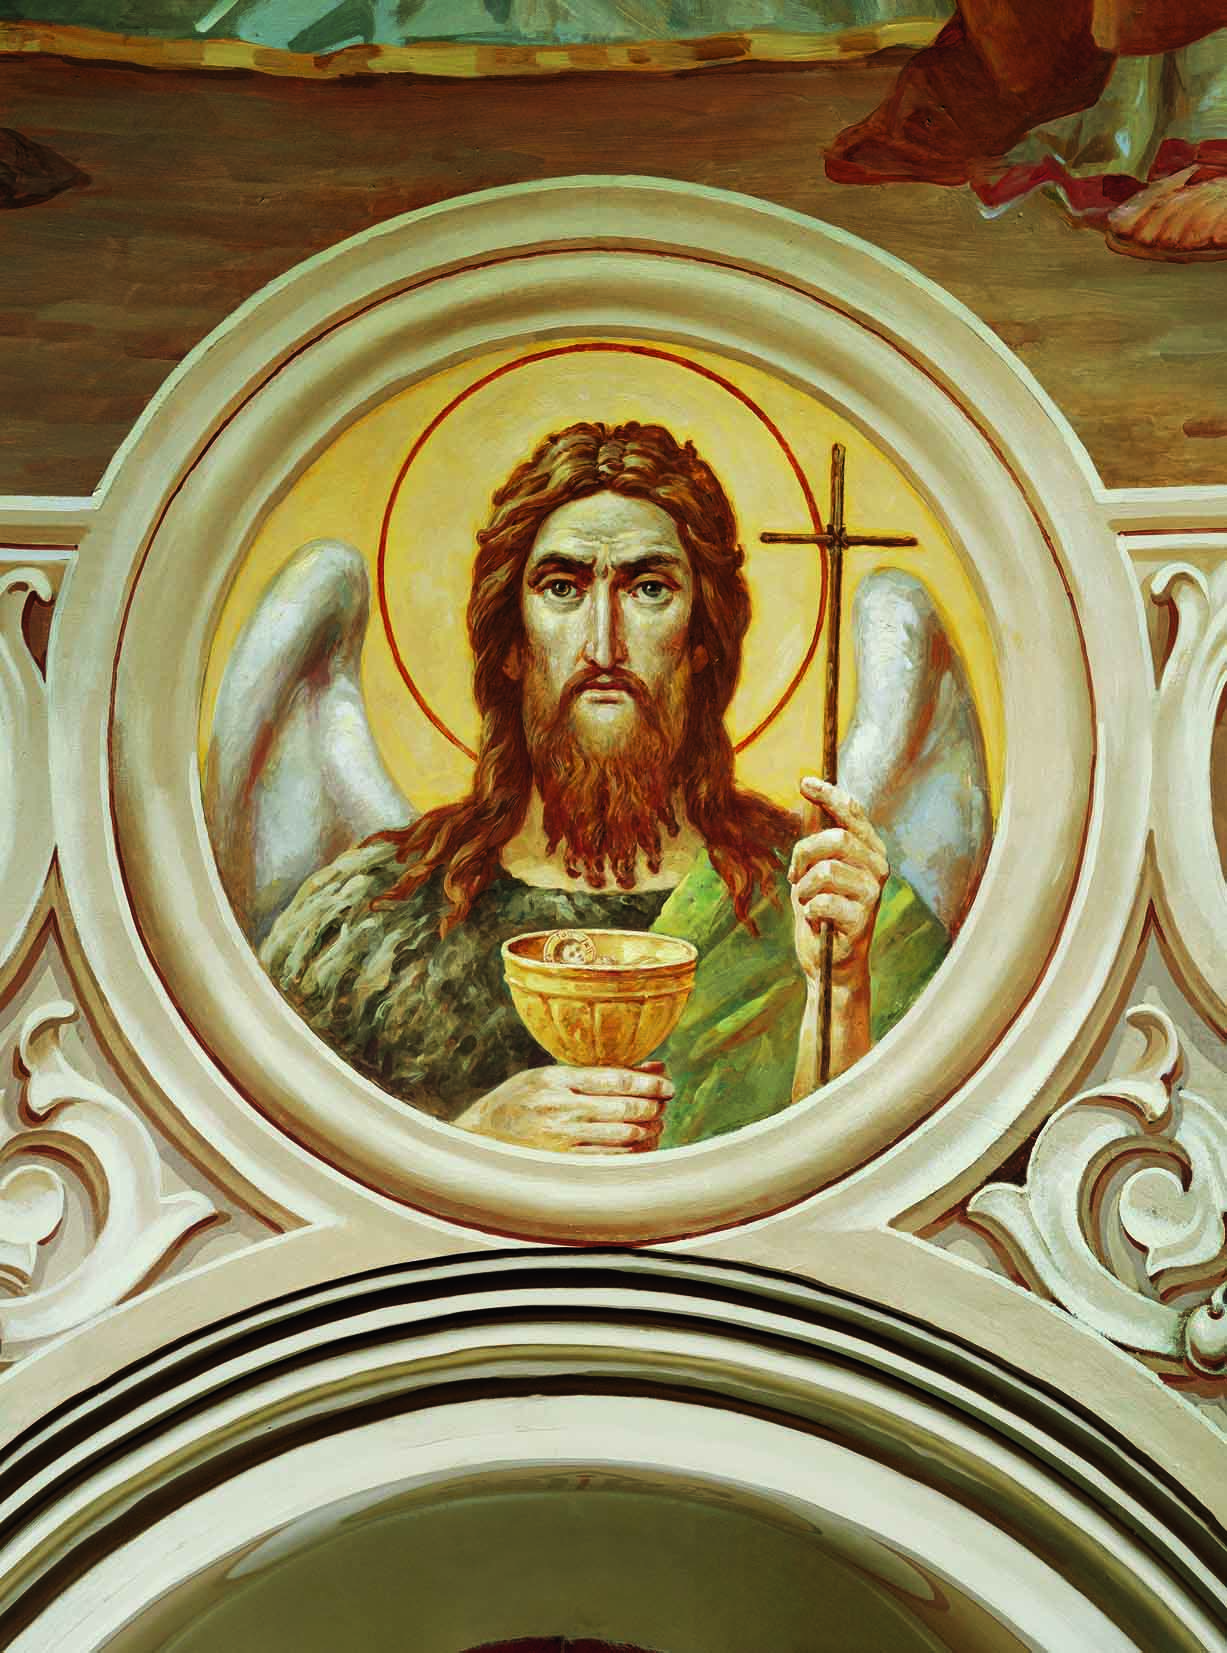 The Image of John the Baptist